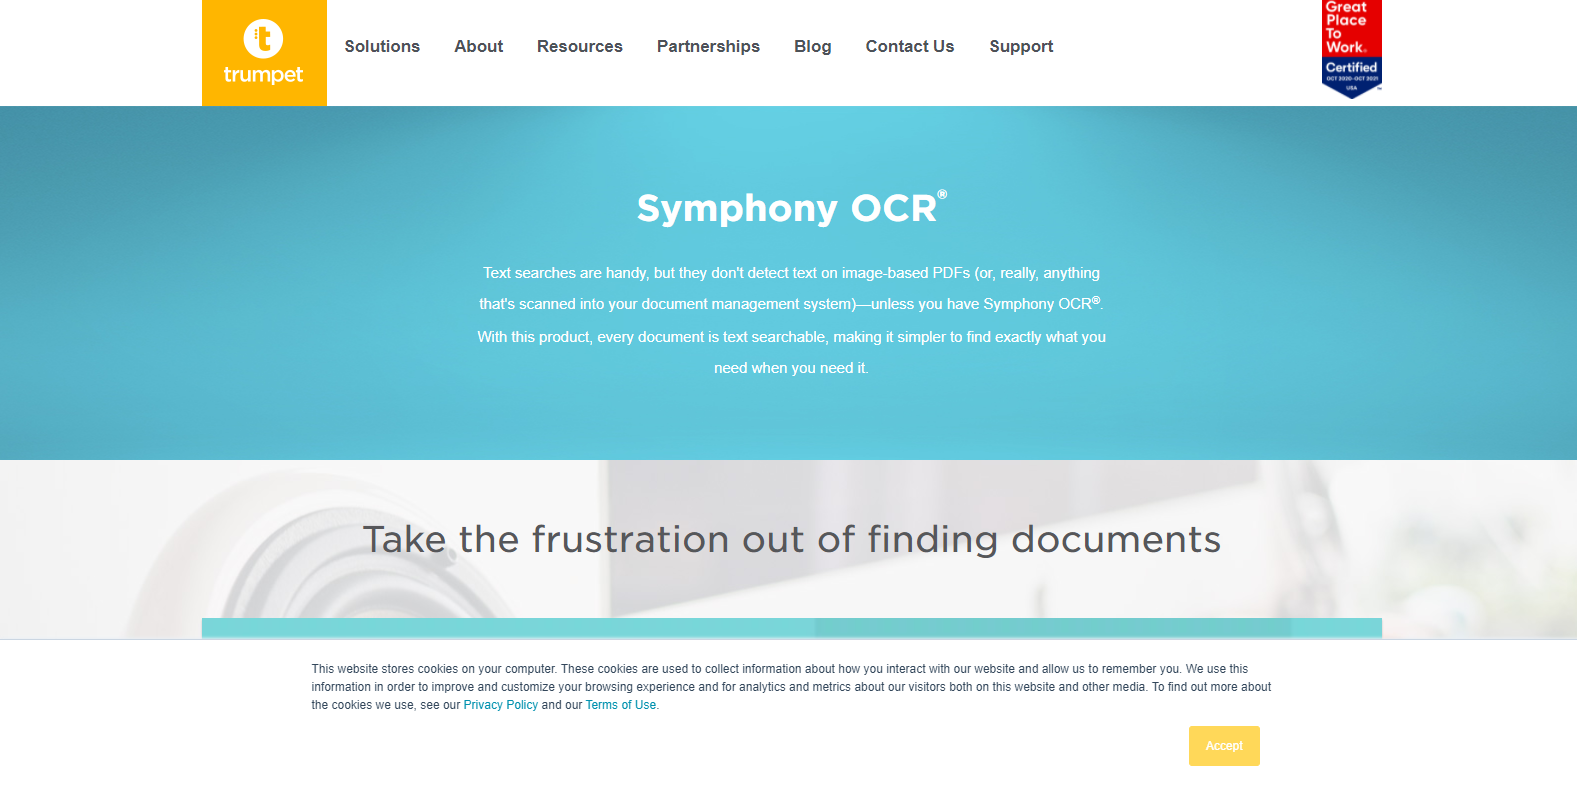 SYMPHONY ocr website